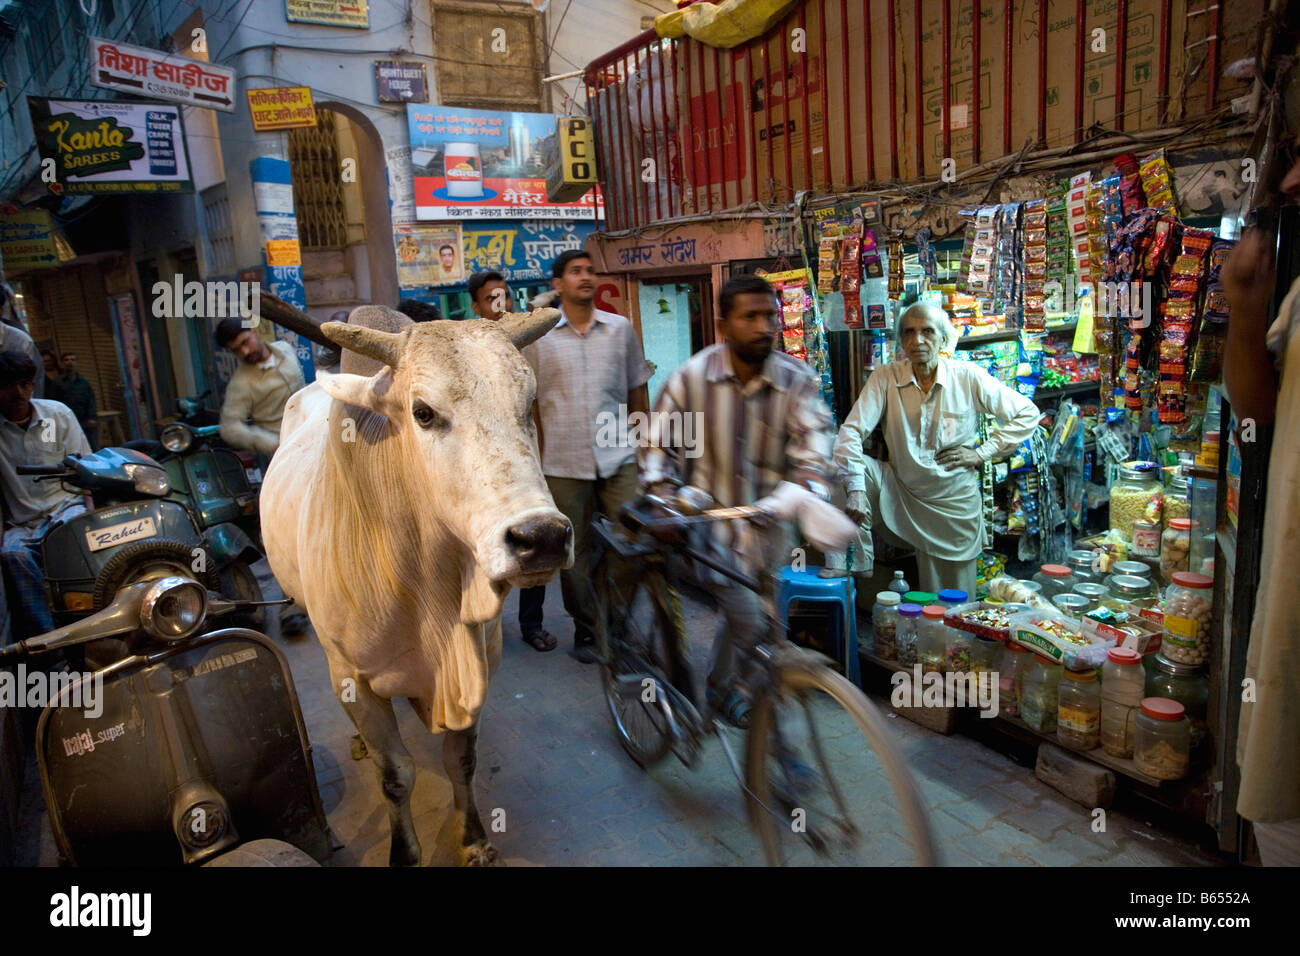 Indien, Uttar Pradesh, Varanasi, Straßenszenen in Altstadt mit heilige Kuh. Stockfoto